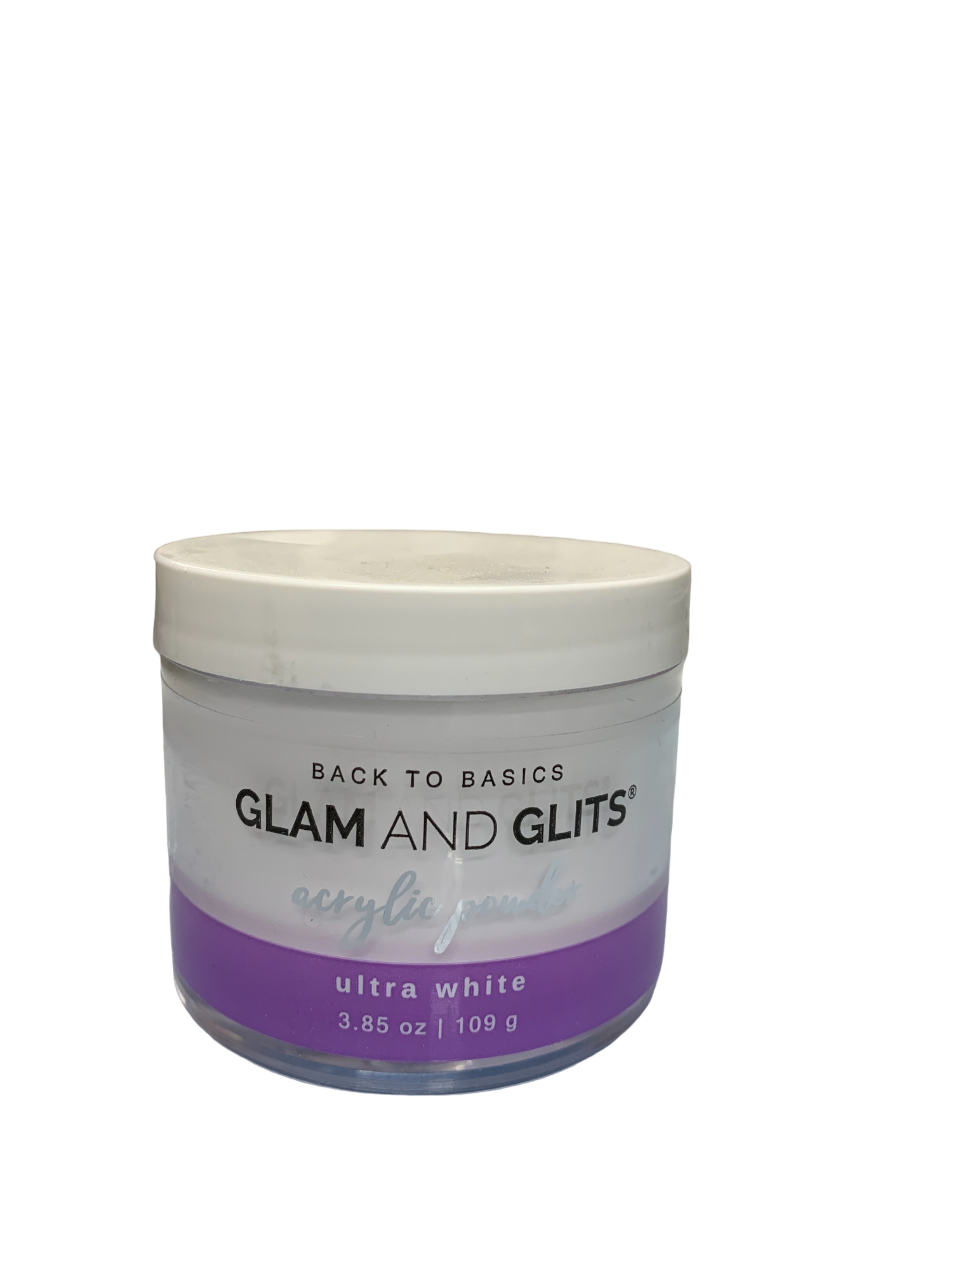 Glam and Glits Acrylic Powder - GLGLUW - Ultra White